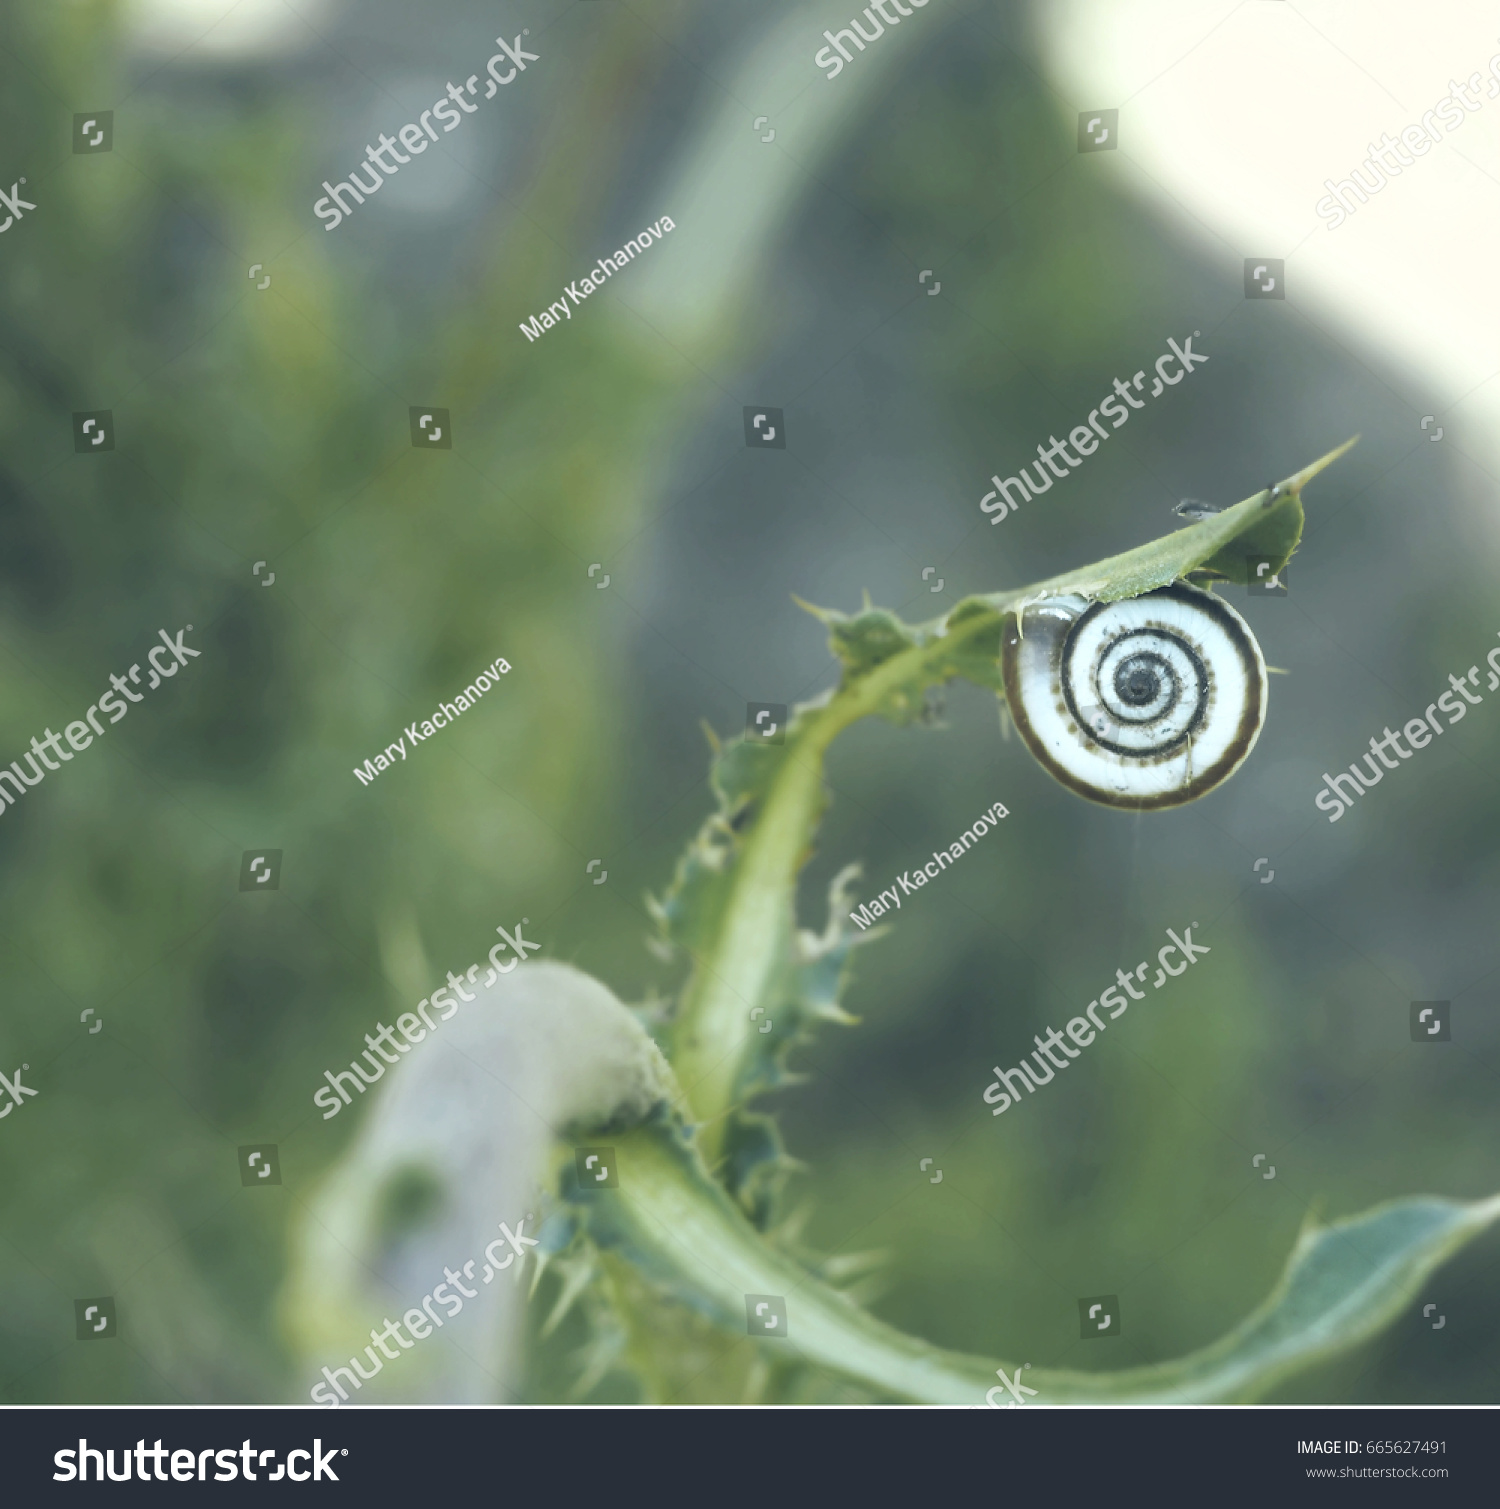 Snail On Stalk Green Plant Closeup Stock Photo 665627491 - Shutterstock